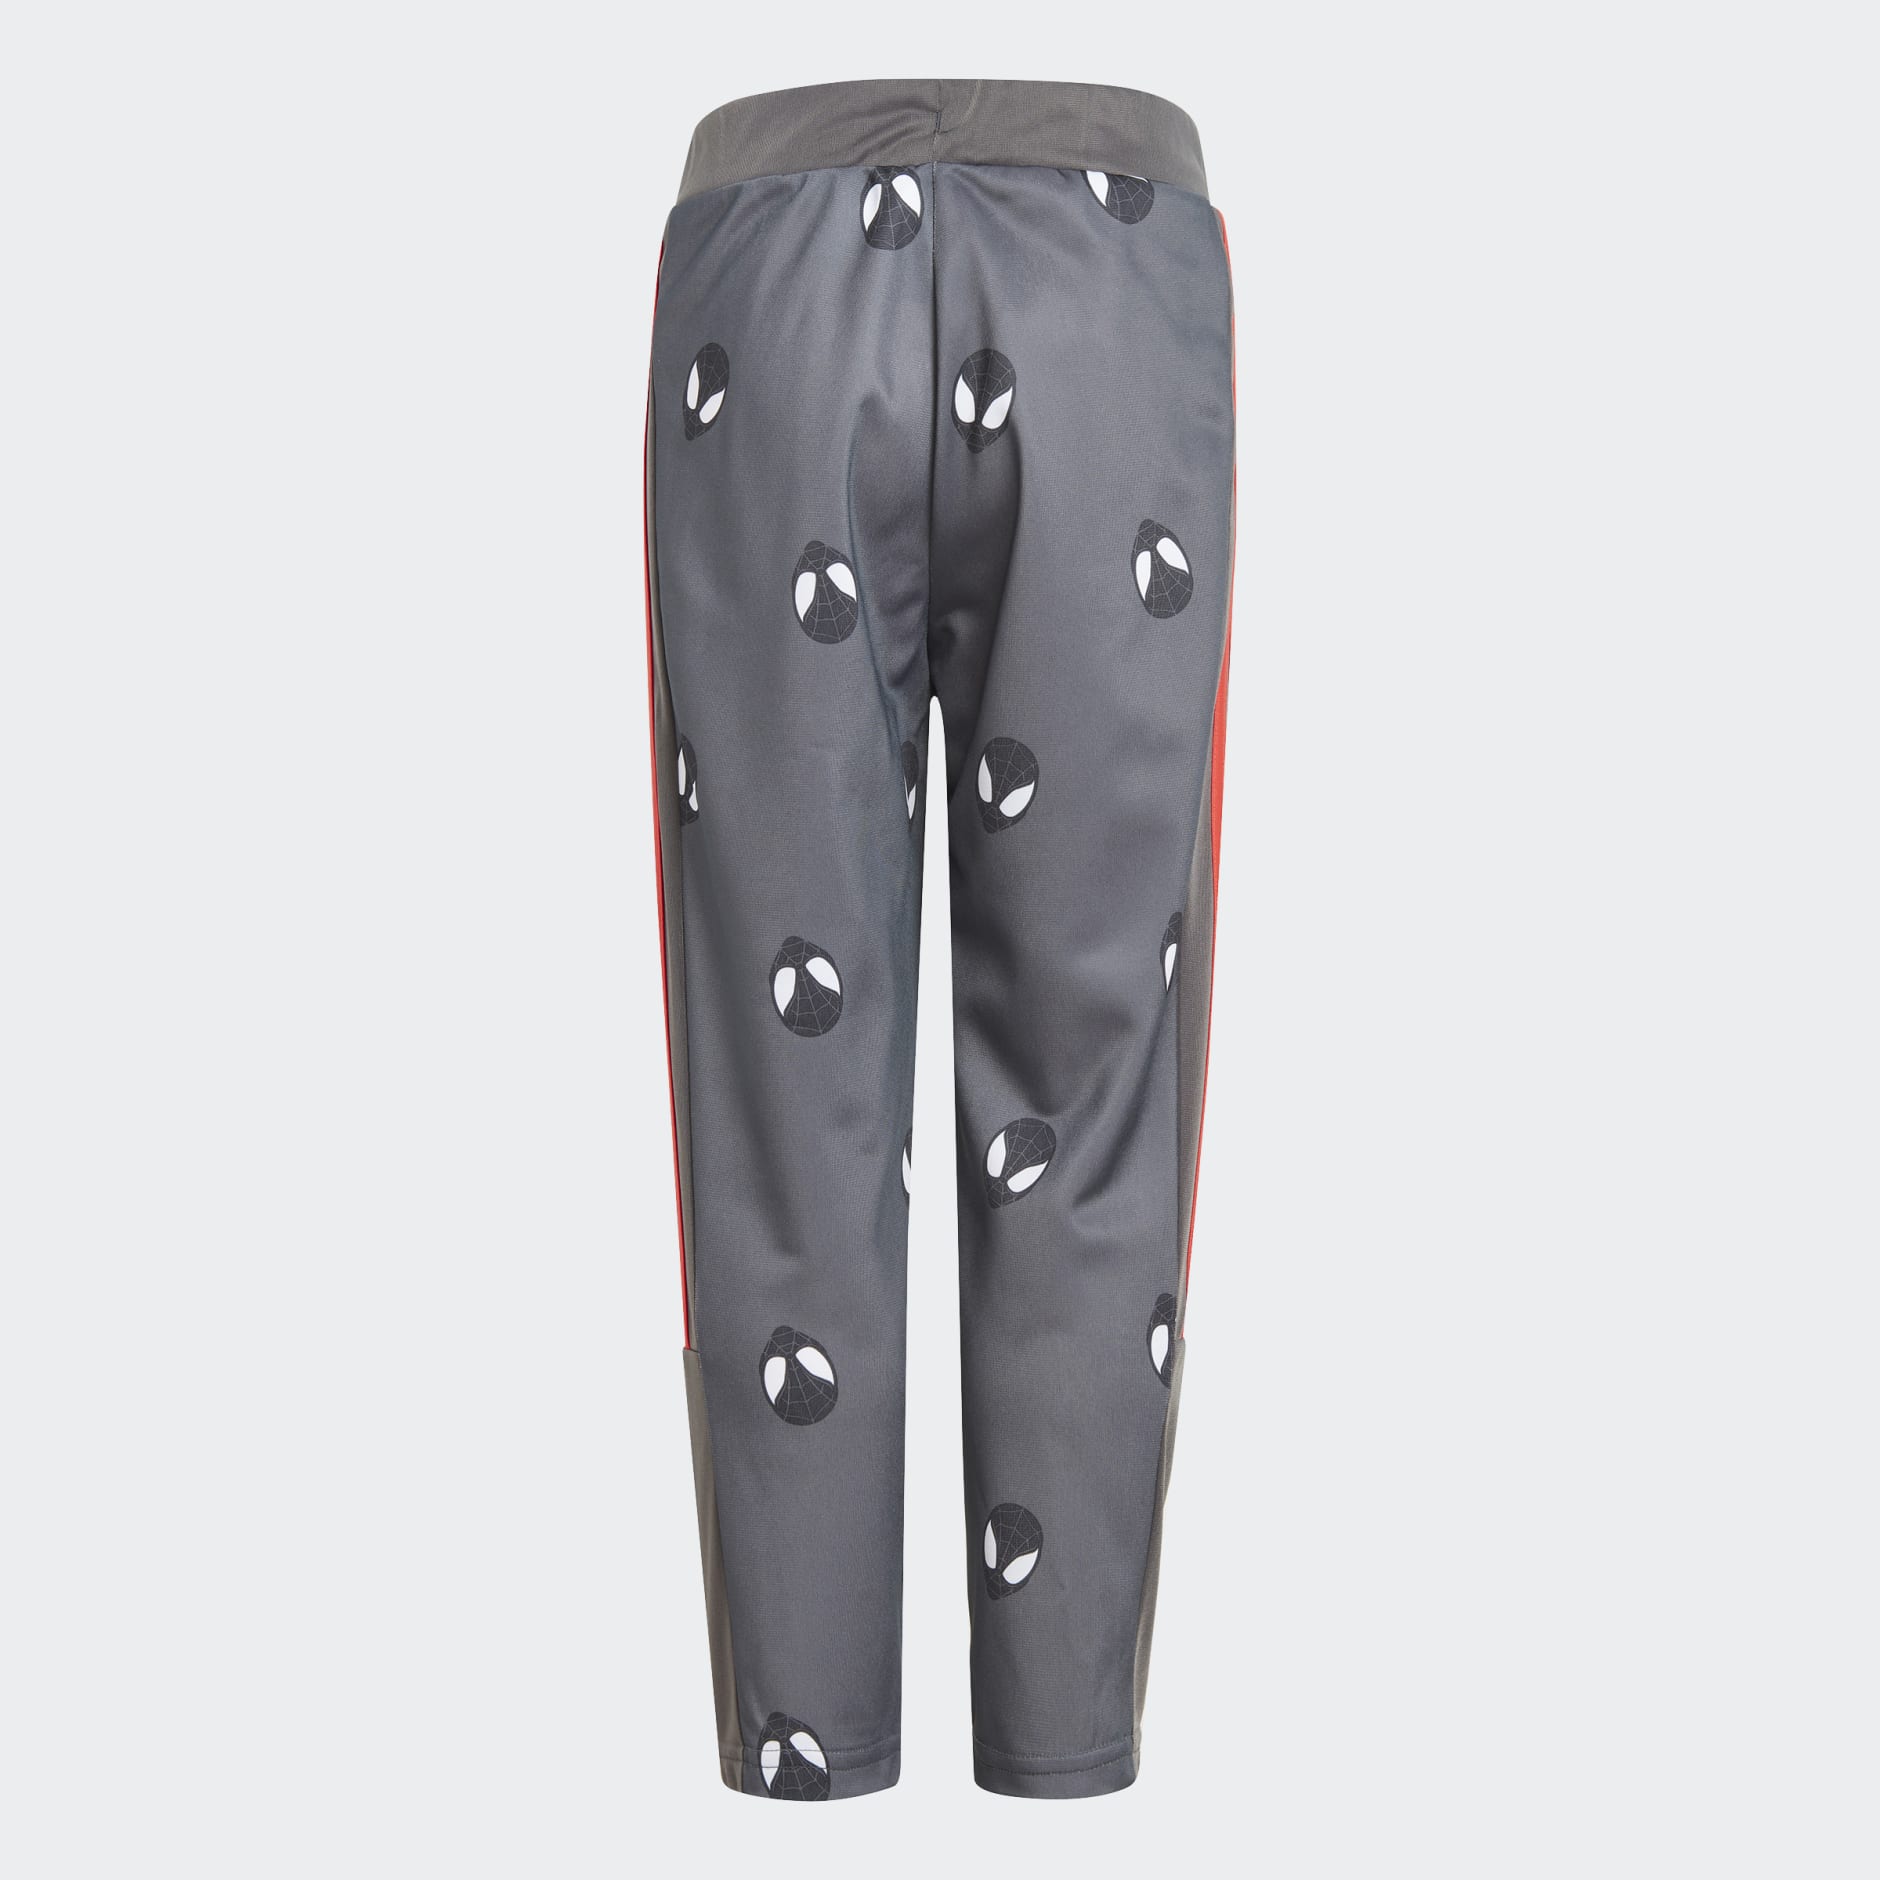 Kids Clothing - adidas x Marvel Spider-Man Pants - Grey